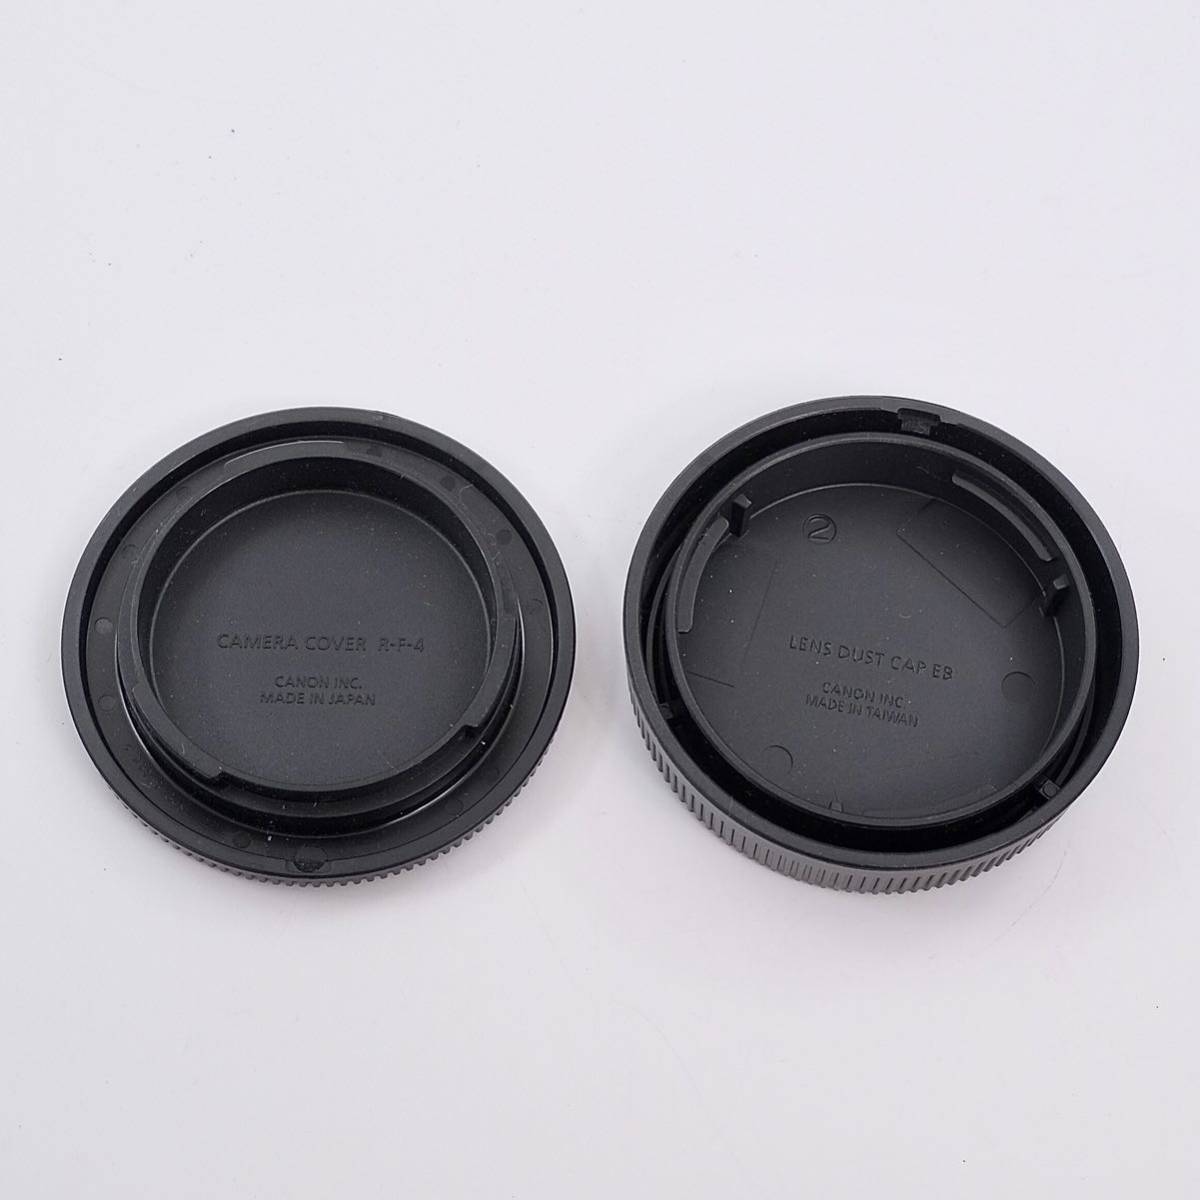 Canon キヤノン Camera Cover R-F-4 Lens Dust Cap EB キャップセット_画像2